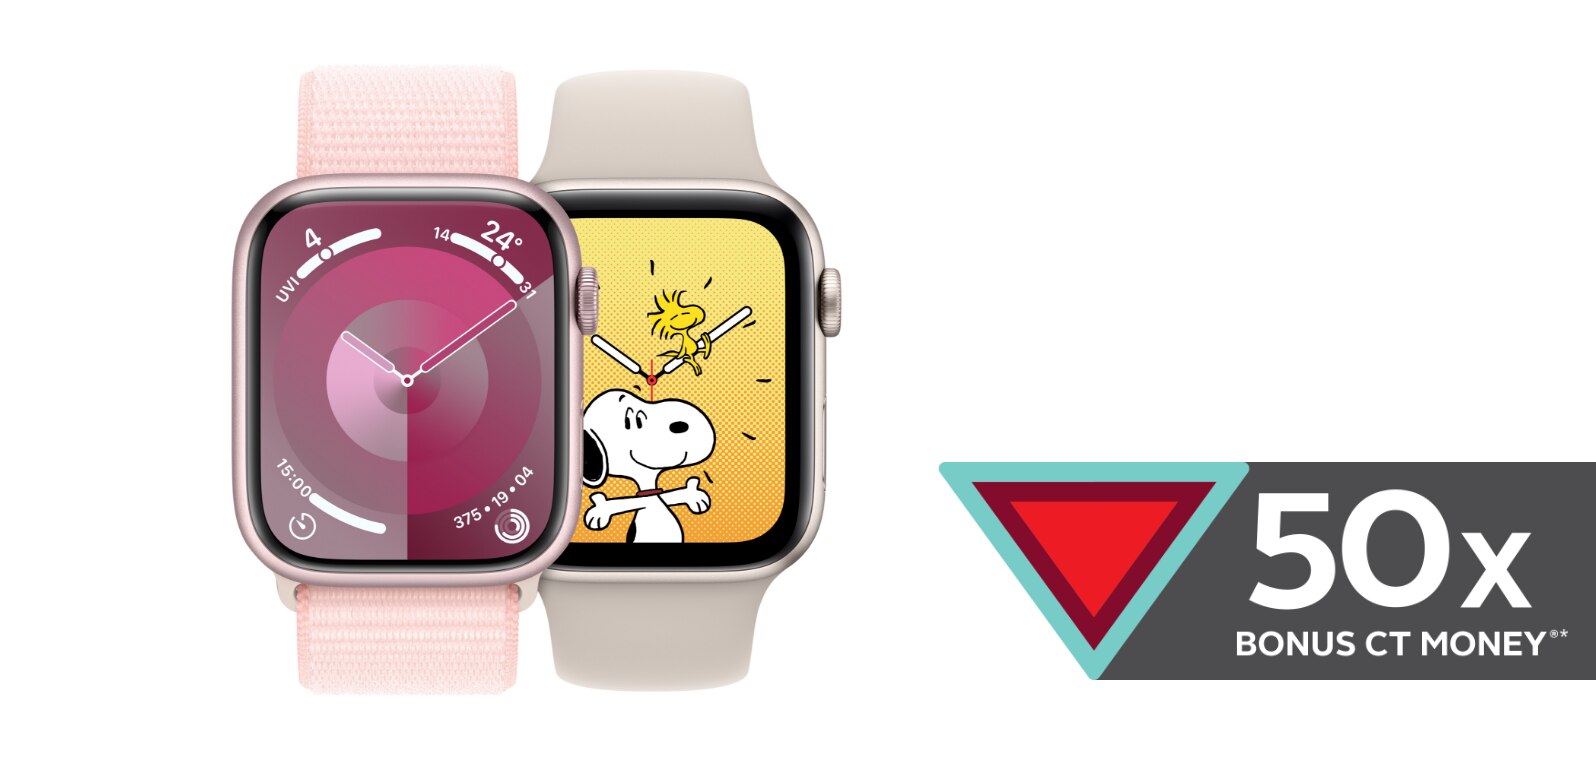 Earn 50x Bonus CT Money on select Apple Watches. Shop Now.